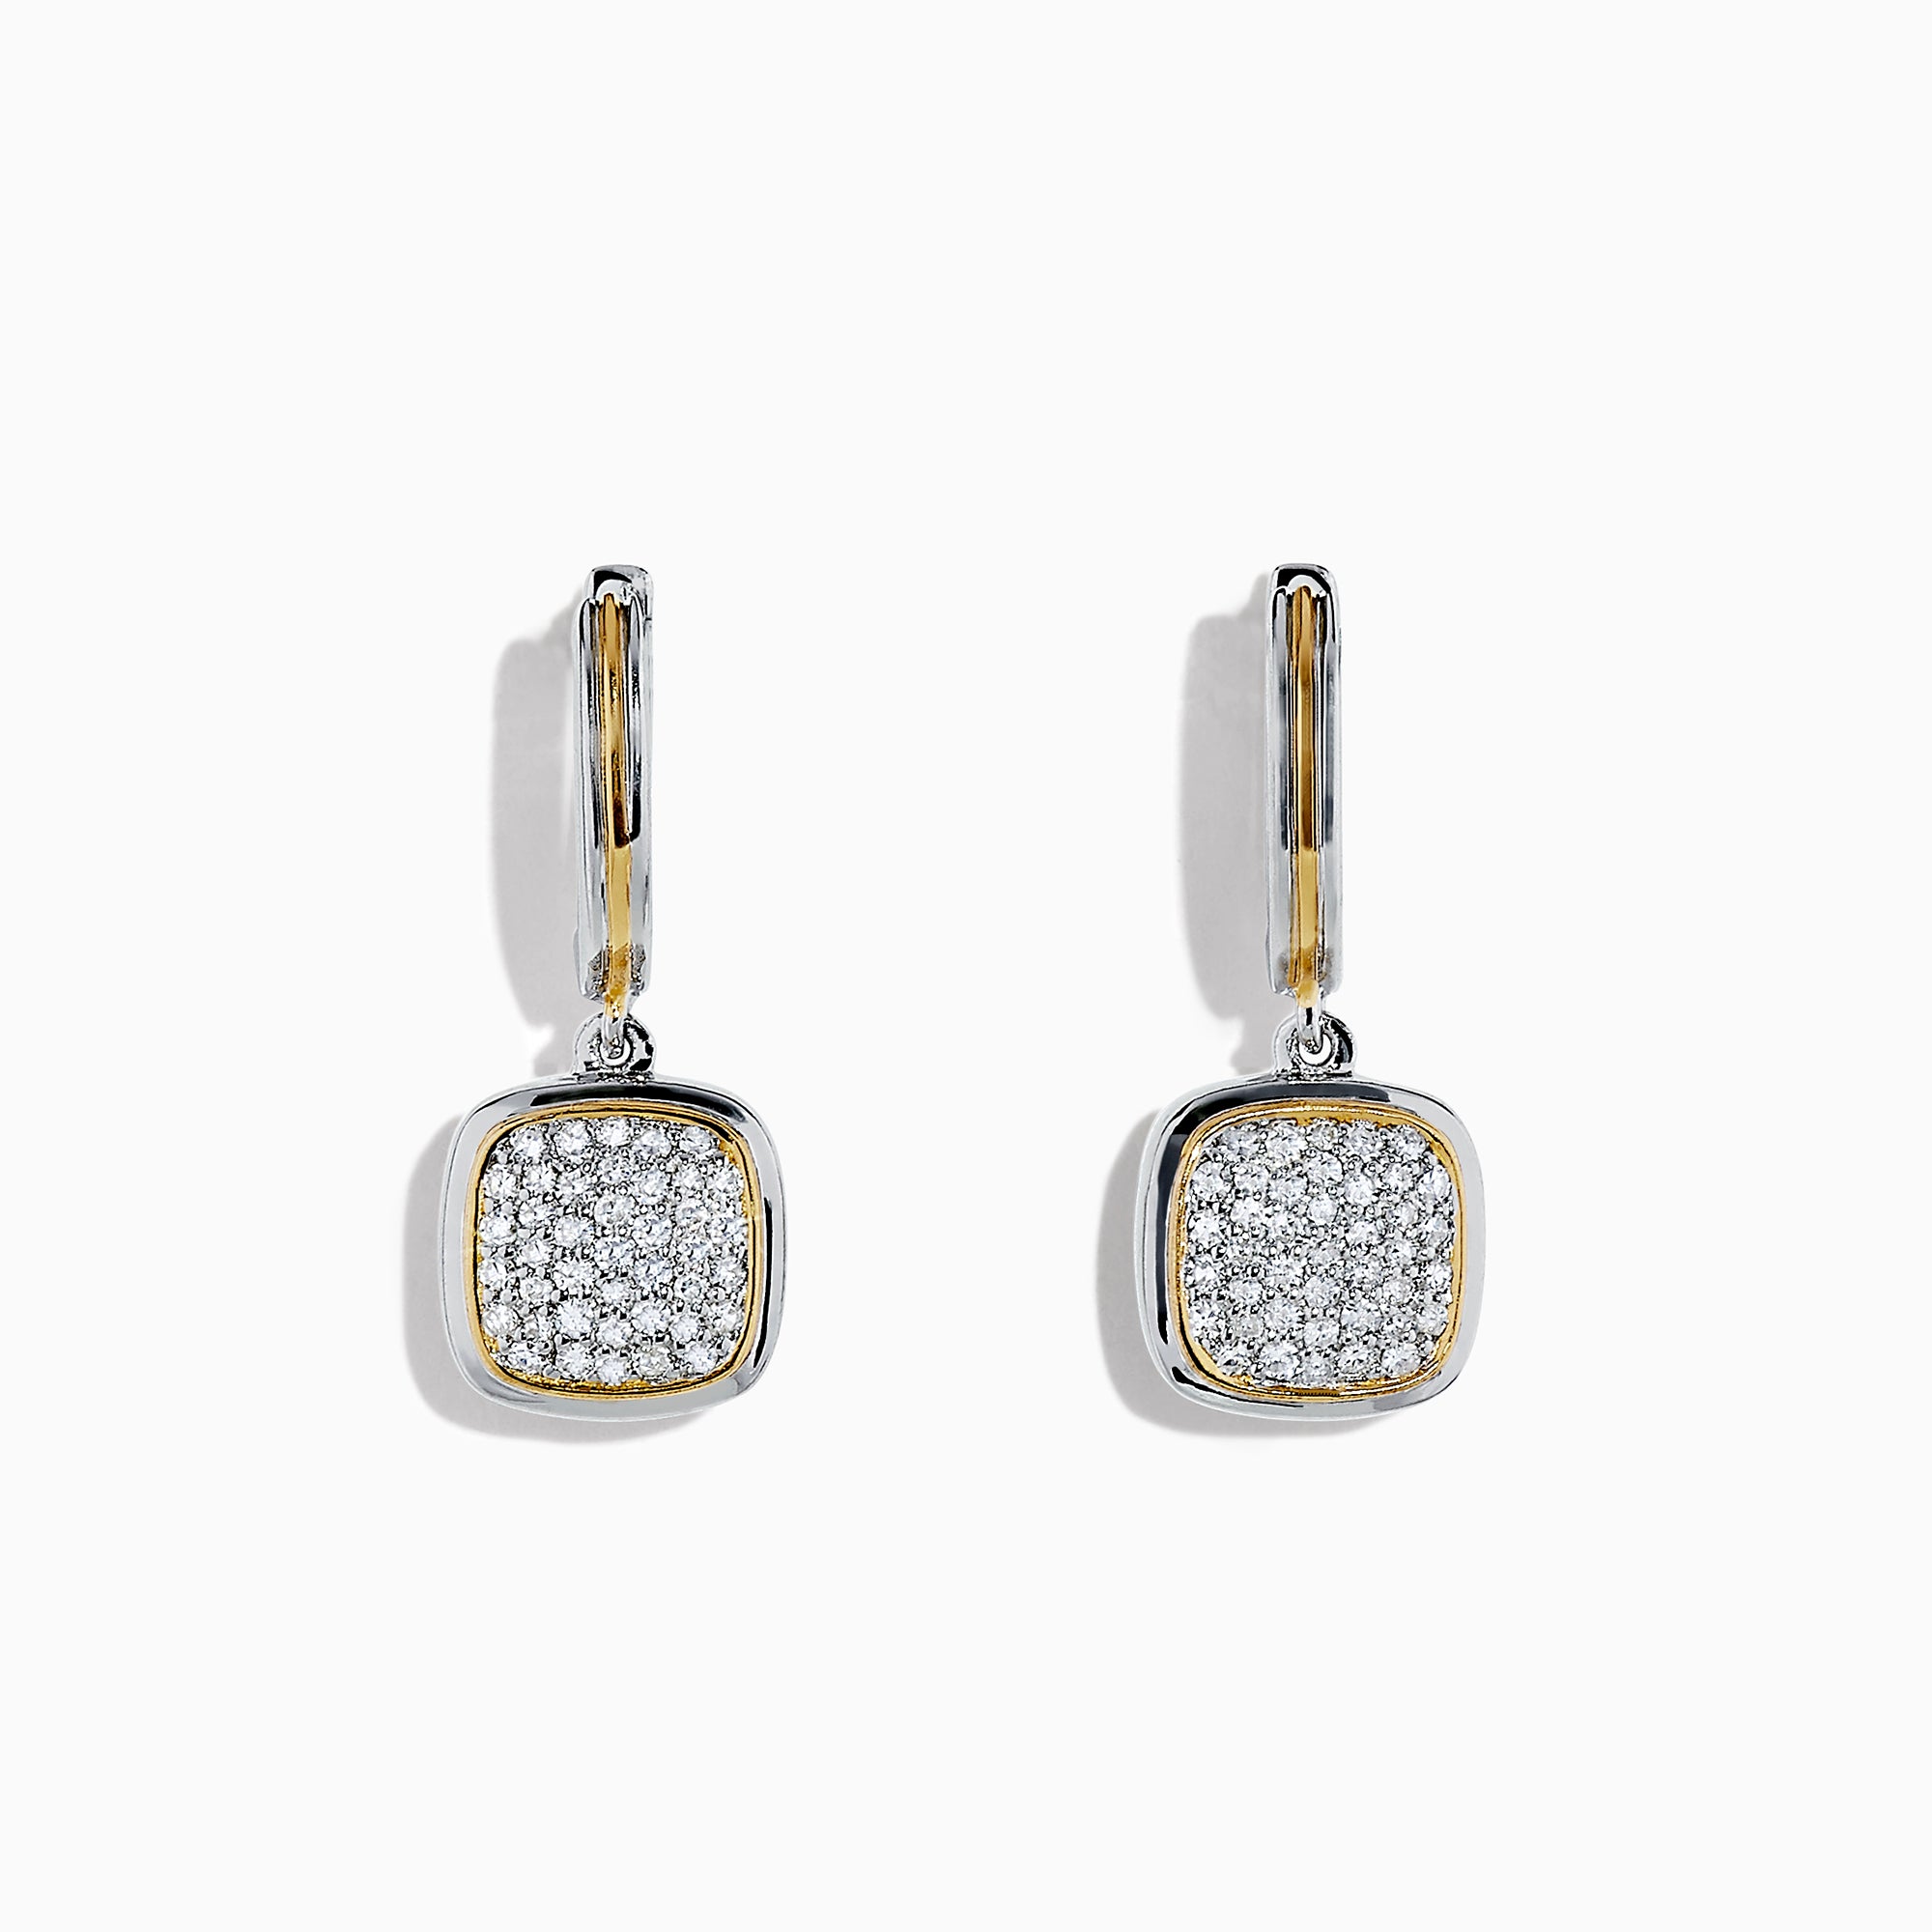 Effy 925 Sterling Silver & 18K Gold Accented Diamond Earrings, 0.42 TCW